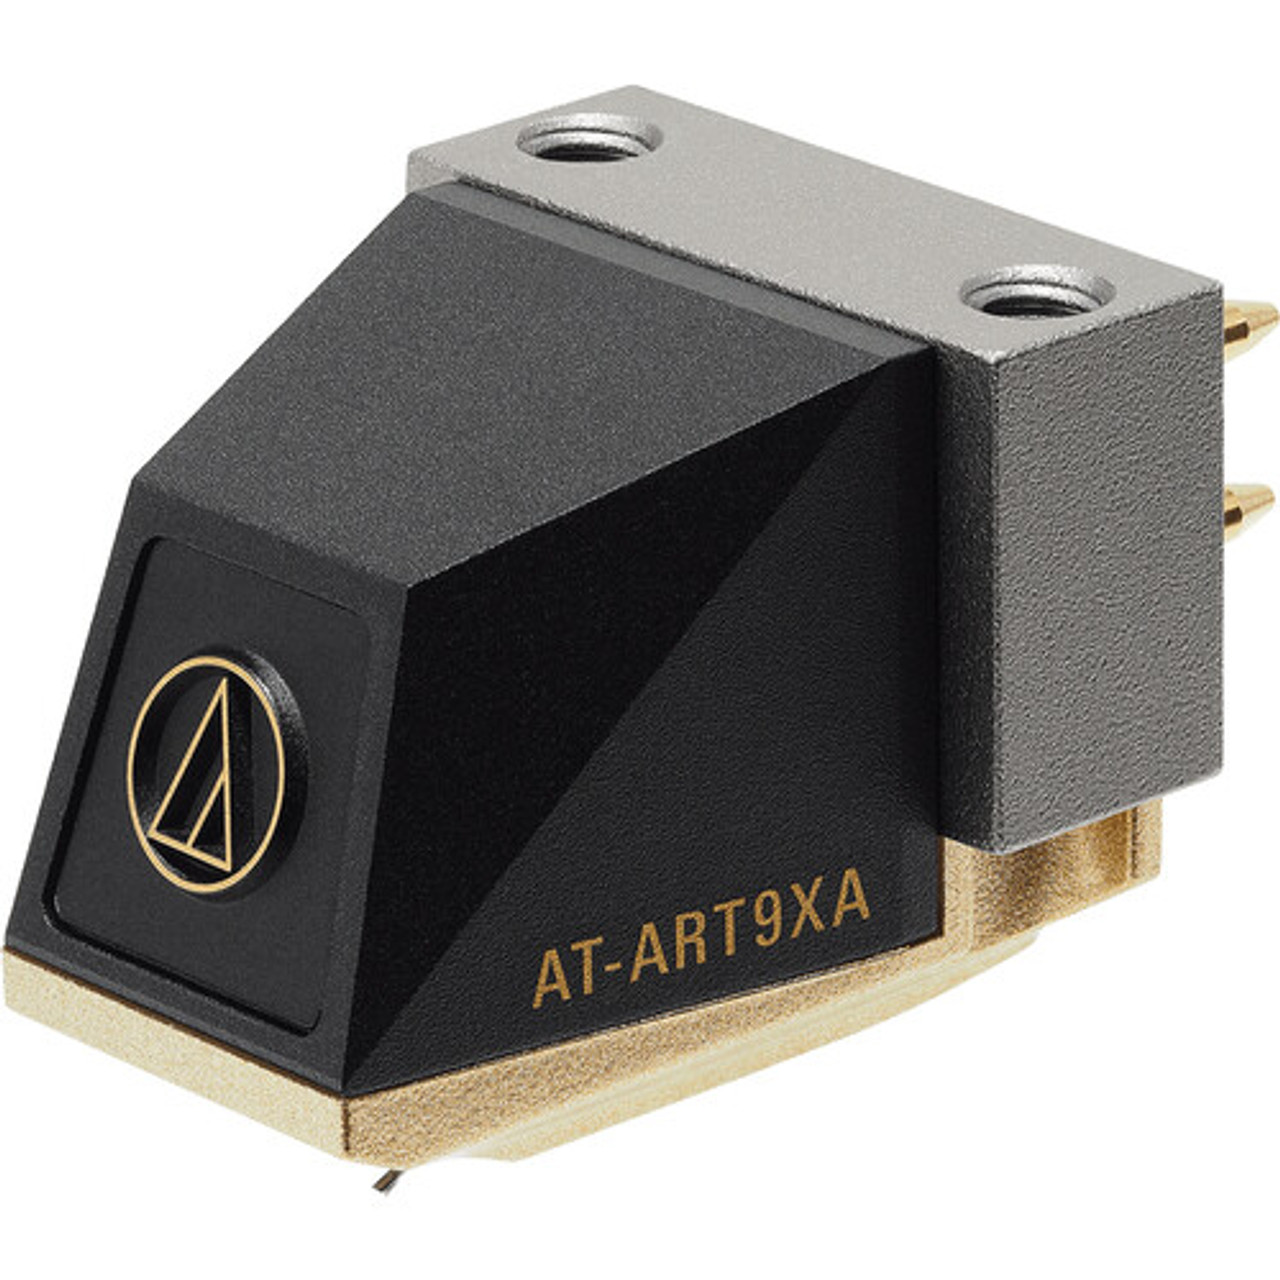 Audio-Technica Consumer AT-ART9XA Nonmagnetic-Core Dual-Moving-Coil Cartridge (AT-ART9XA)